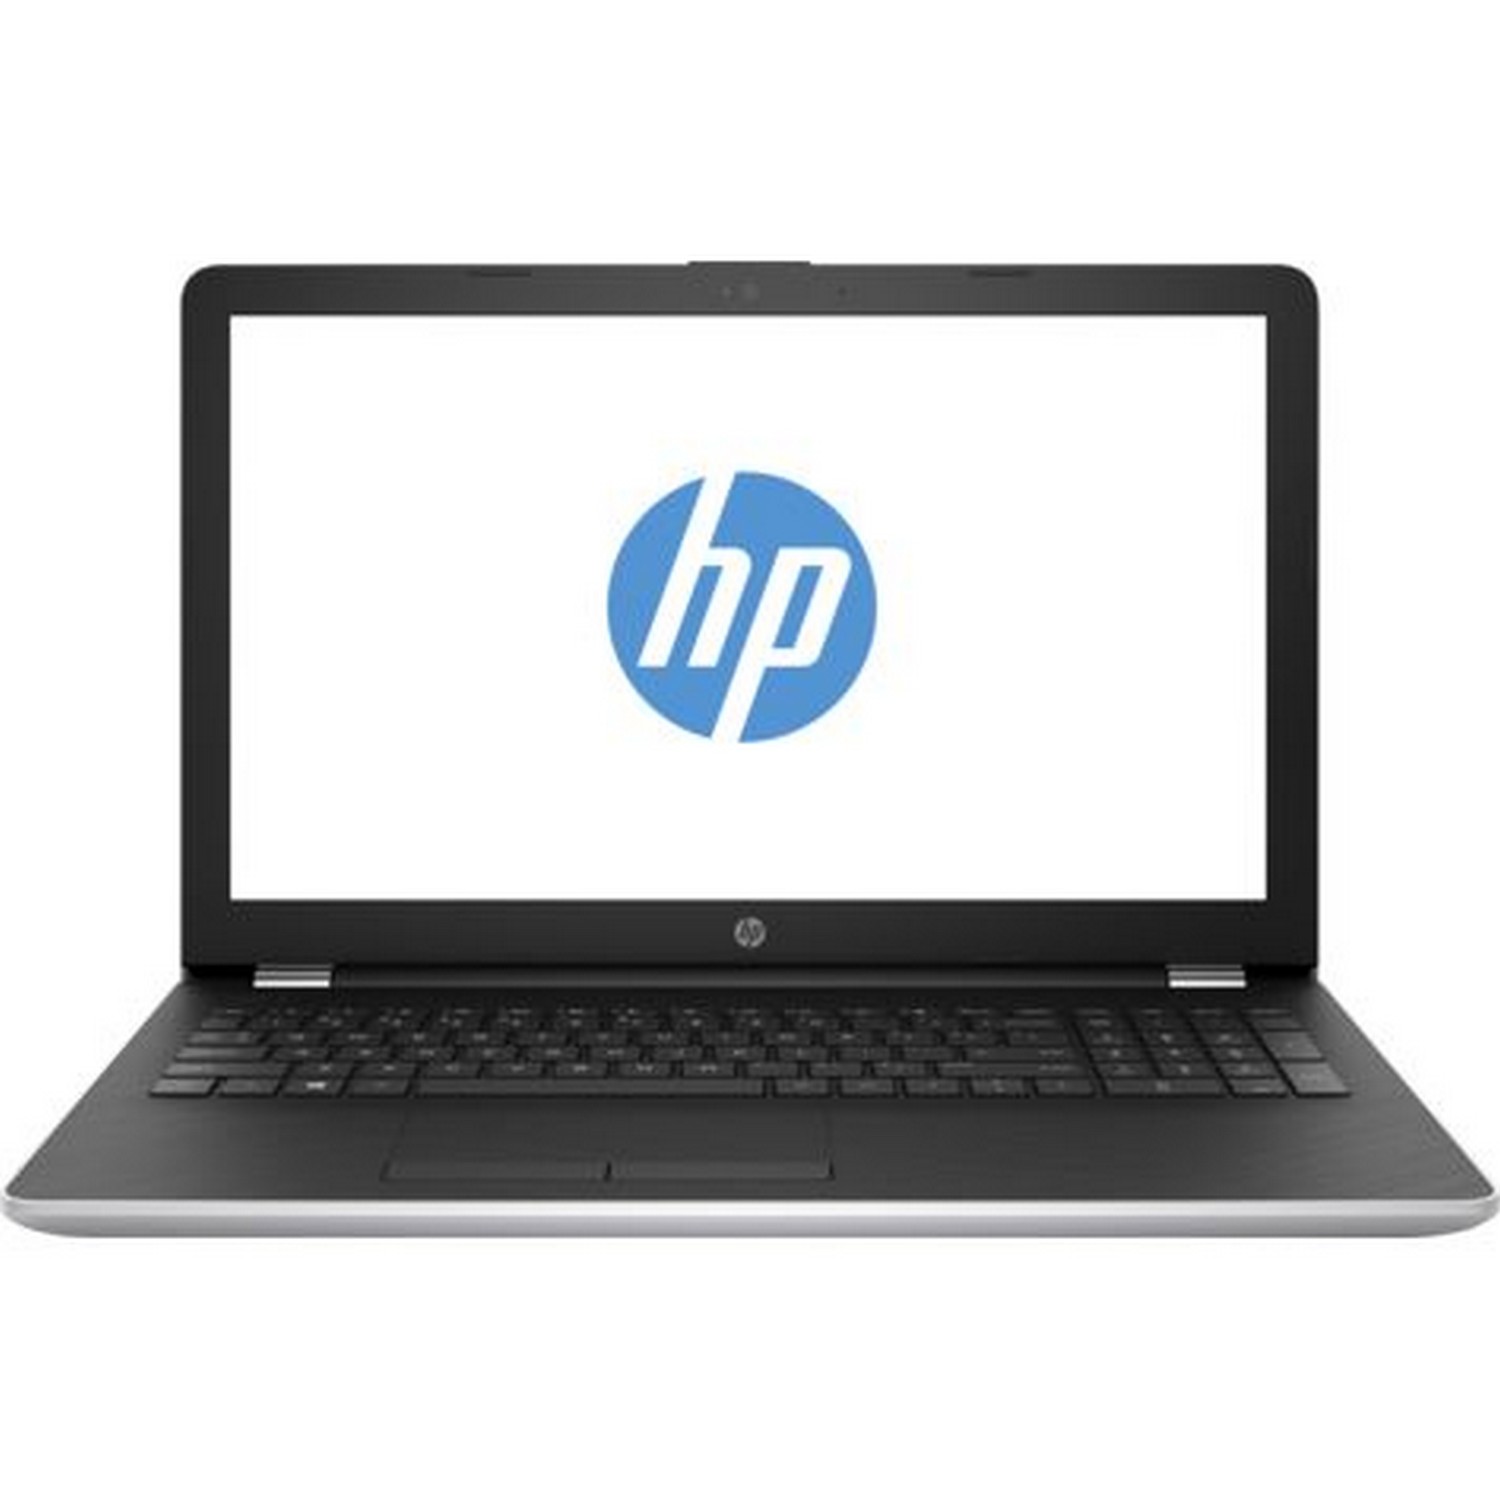 Hp Probook 450 G5 Core I7 8th Generation Laptop Price In Pakistan Laptop Mart 9757